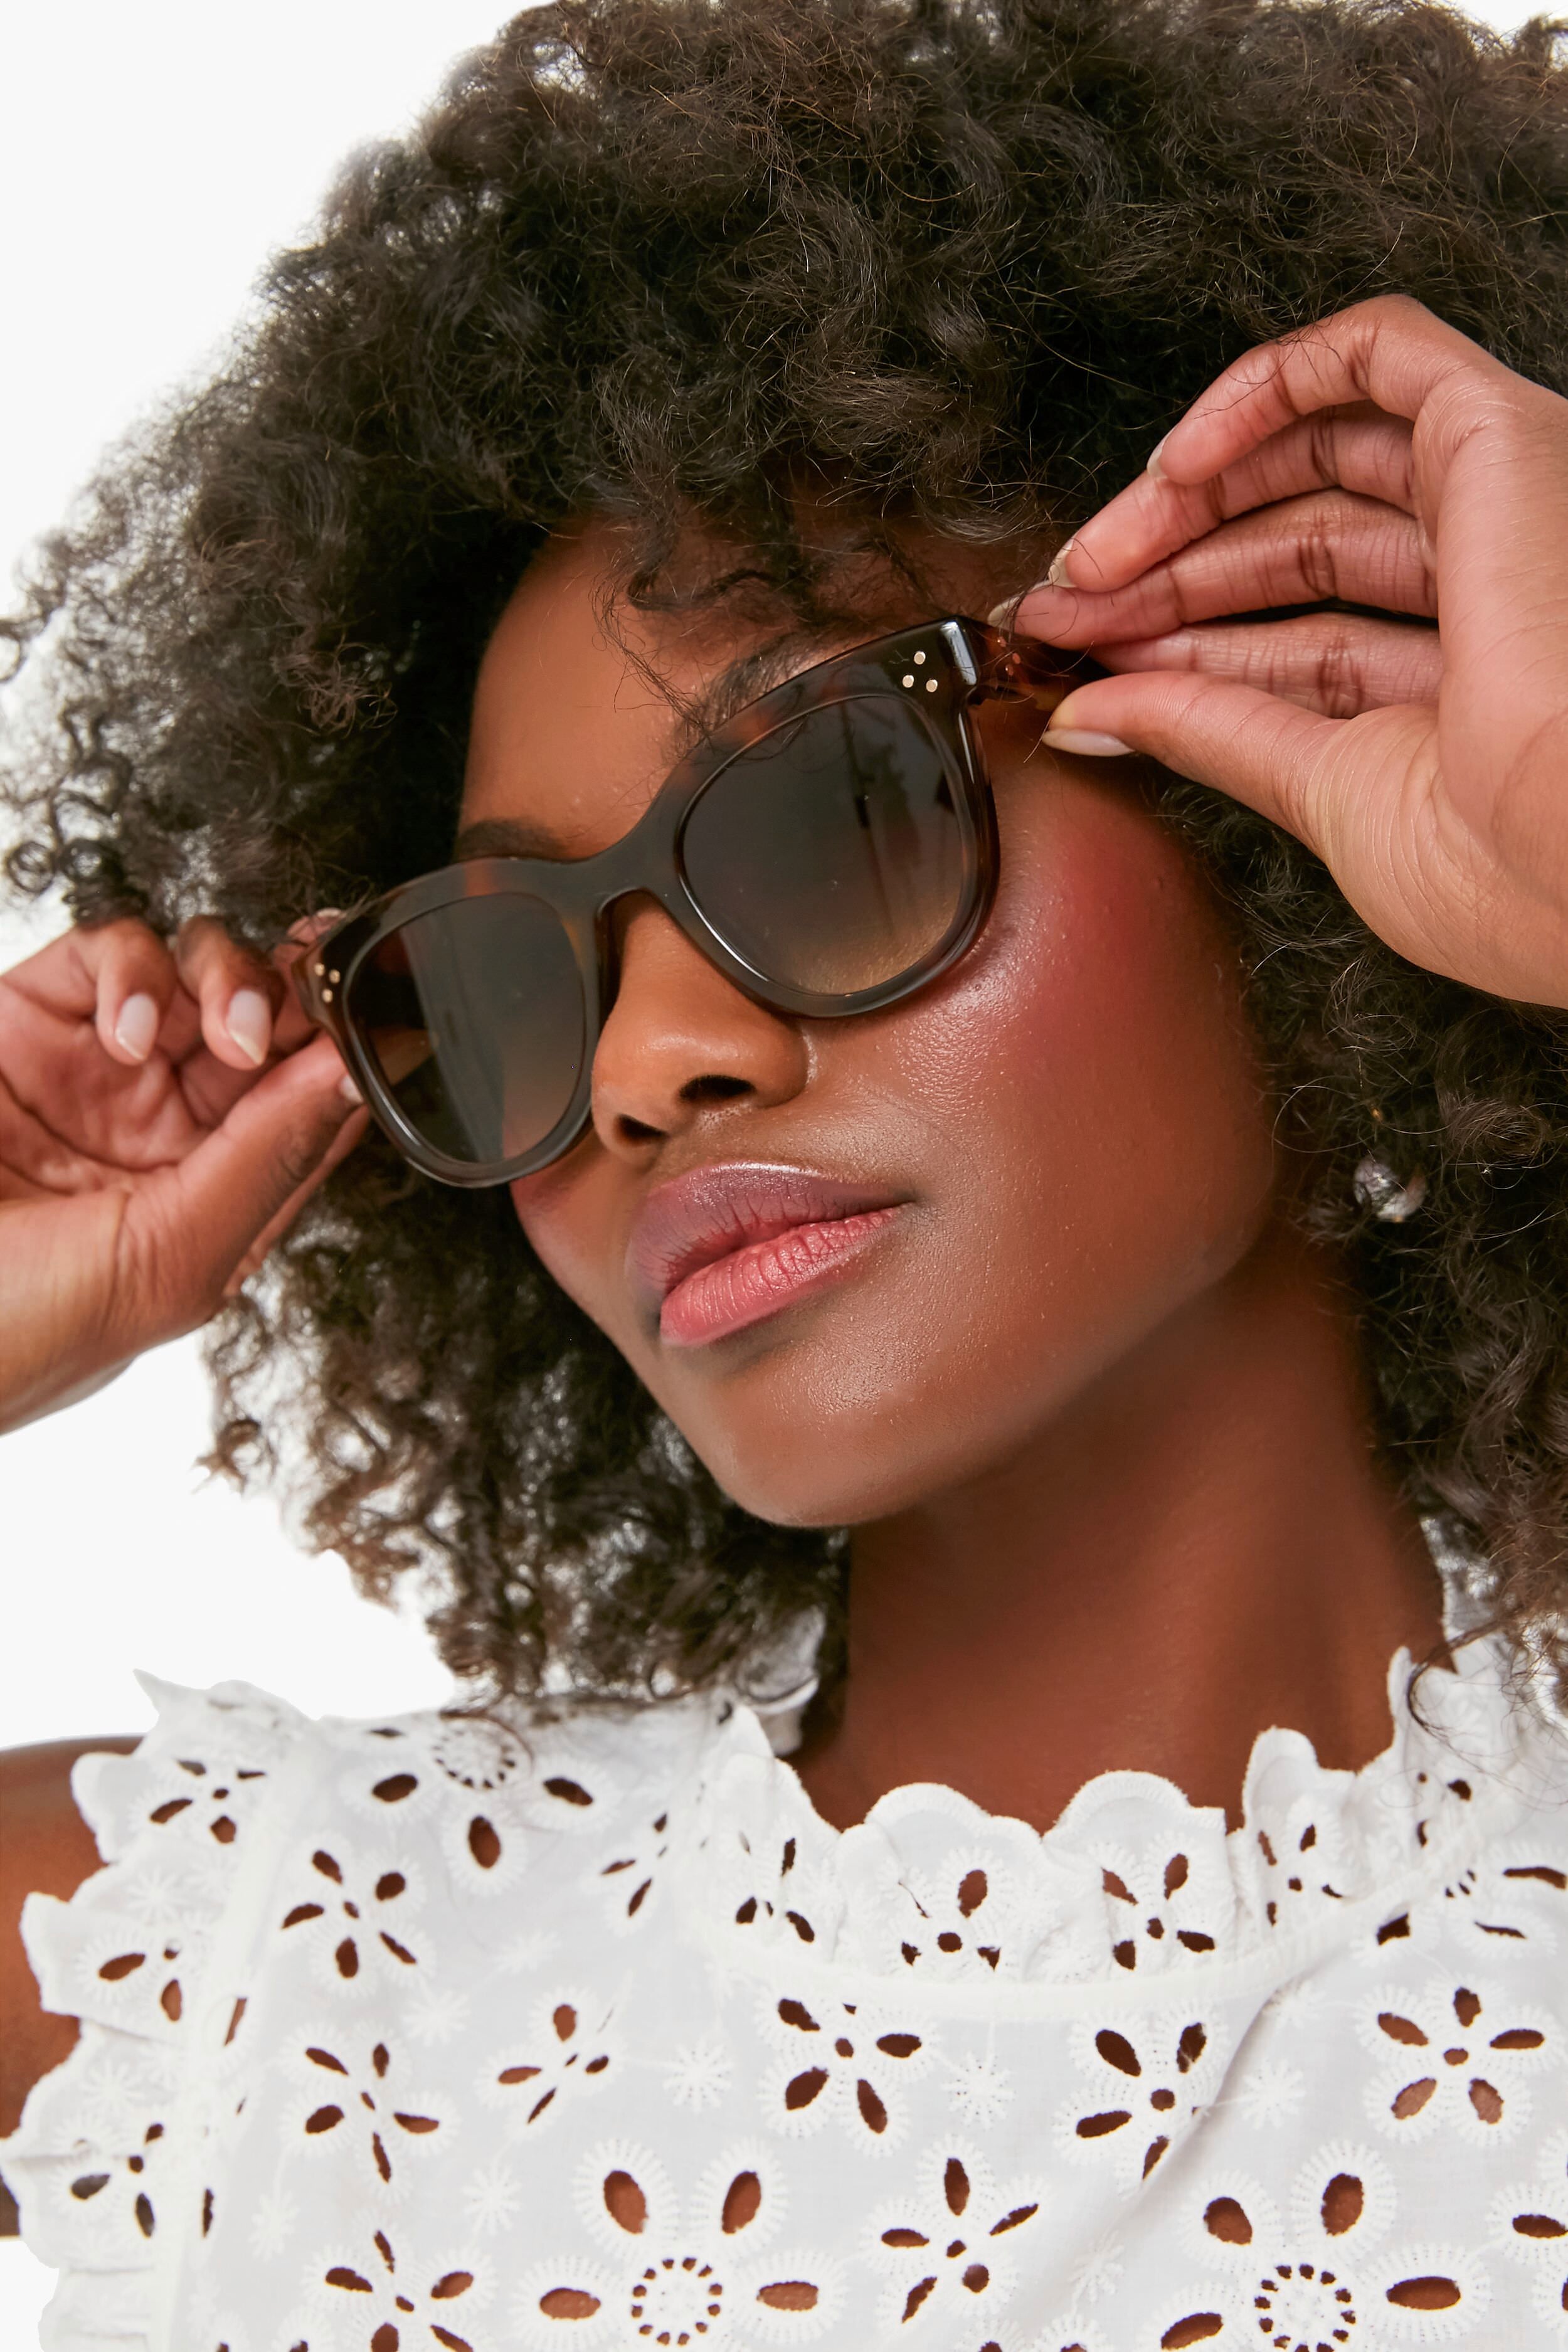 KREWE Acetate Sunglasses for Women